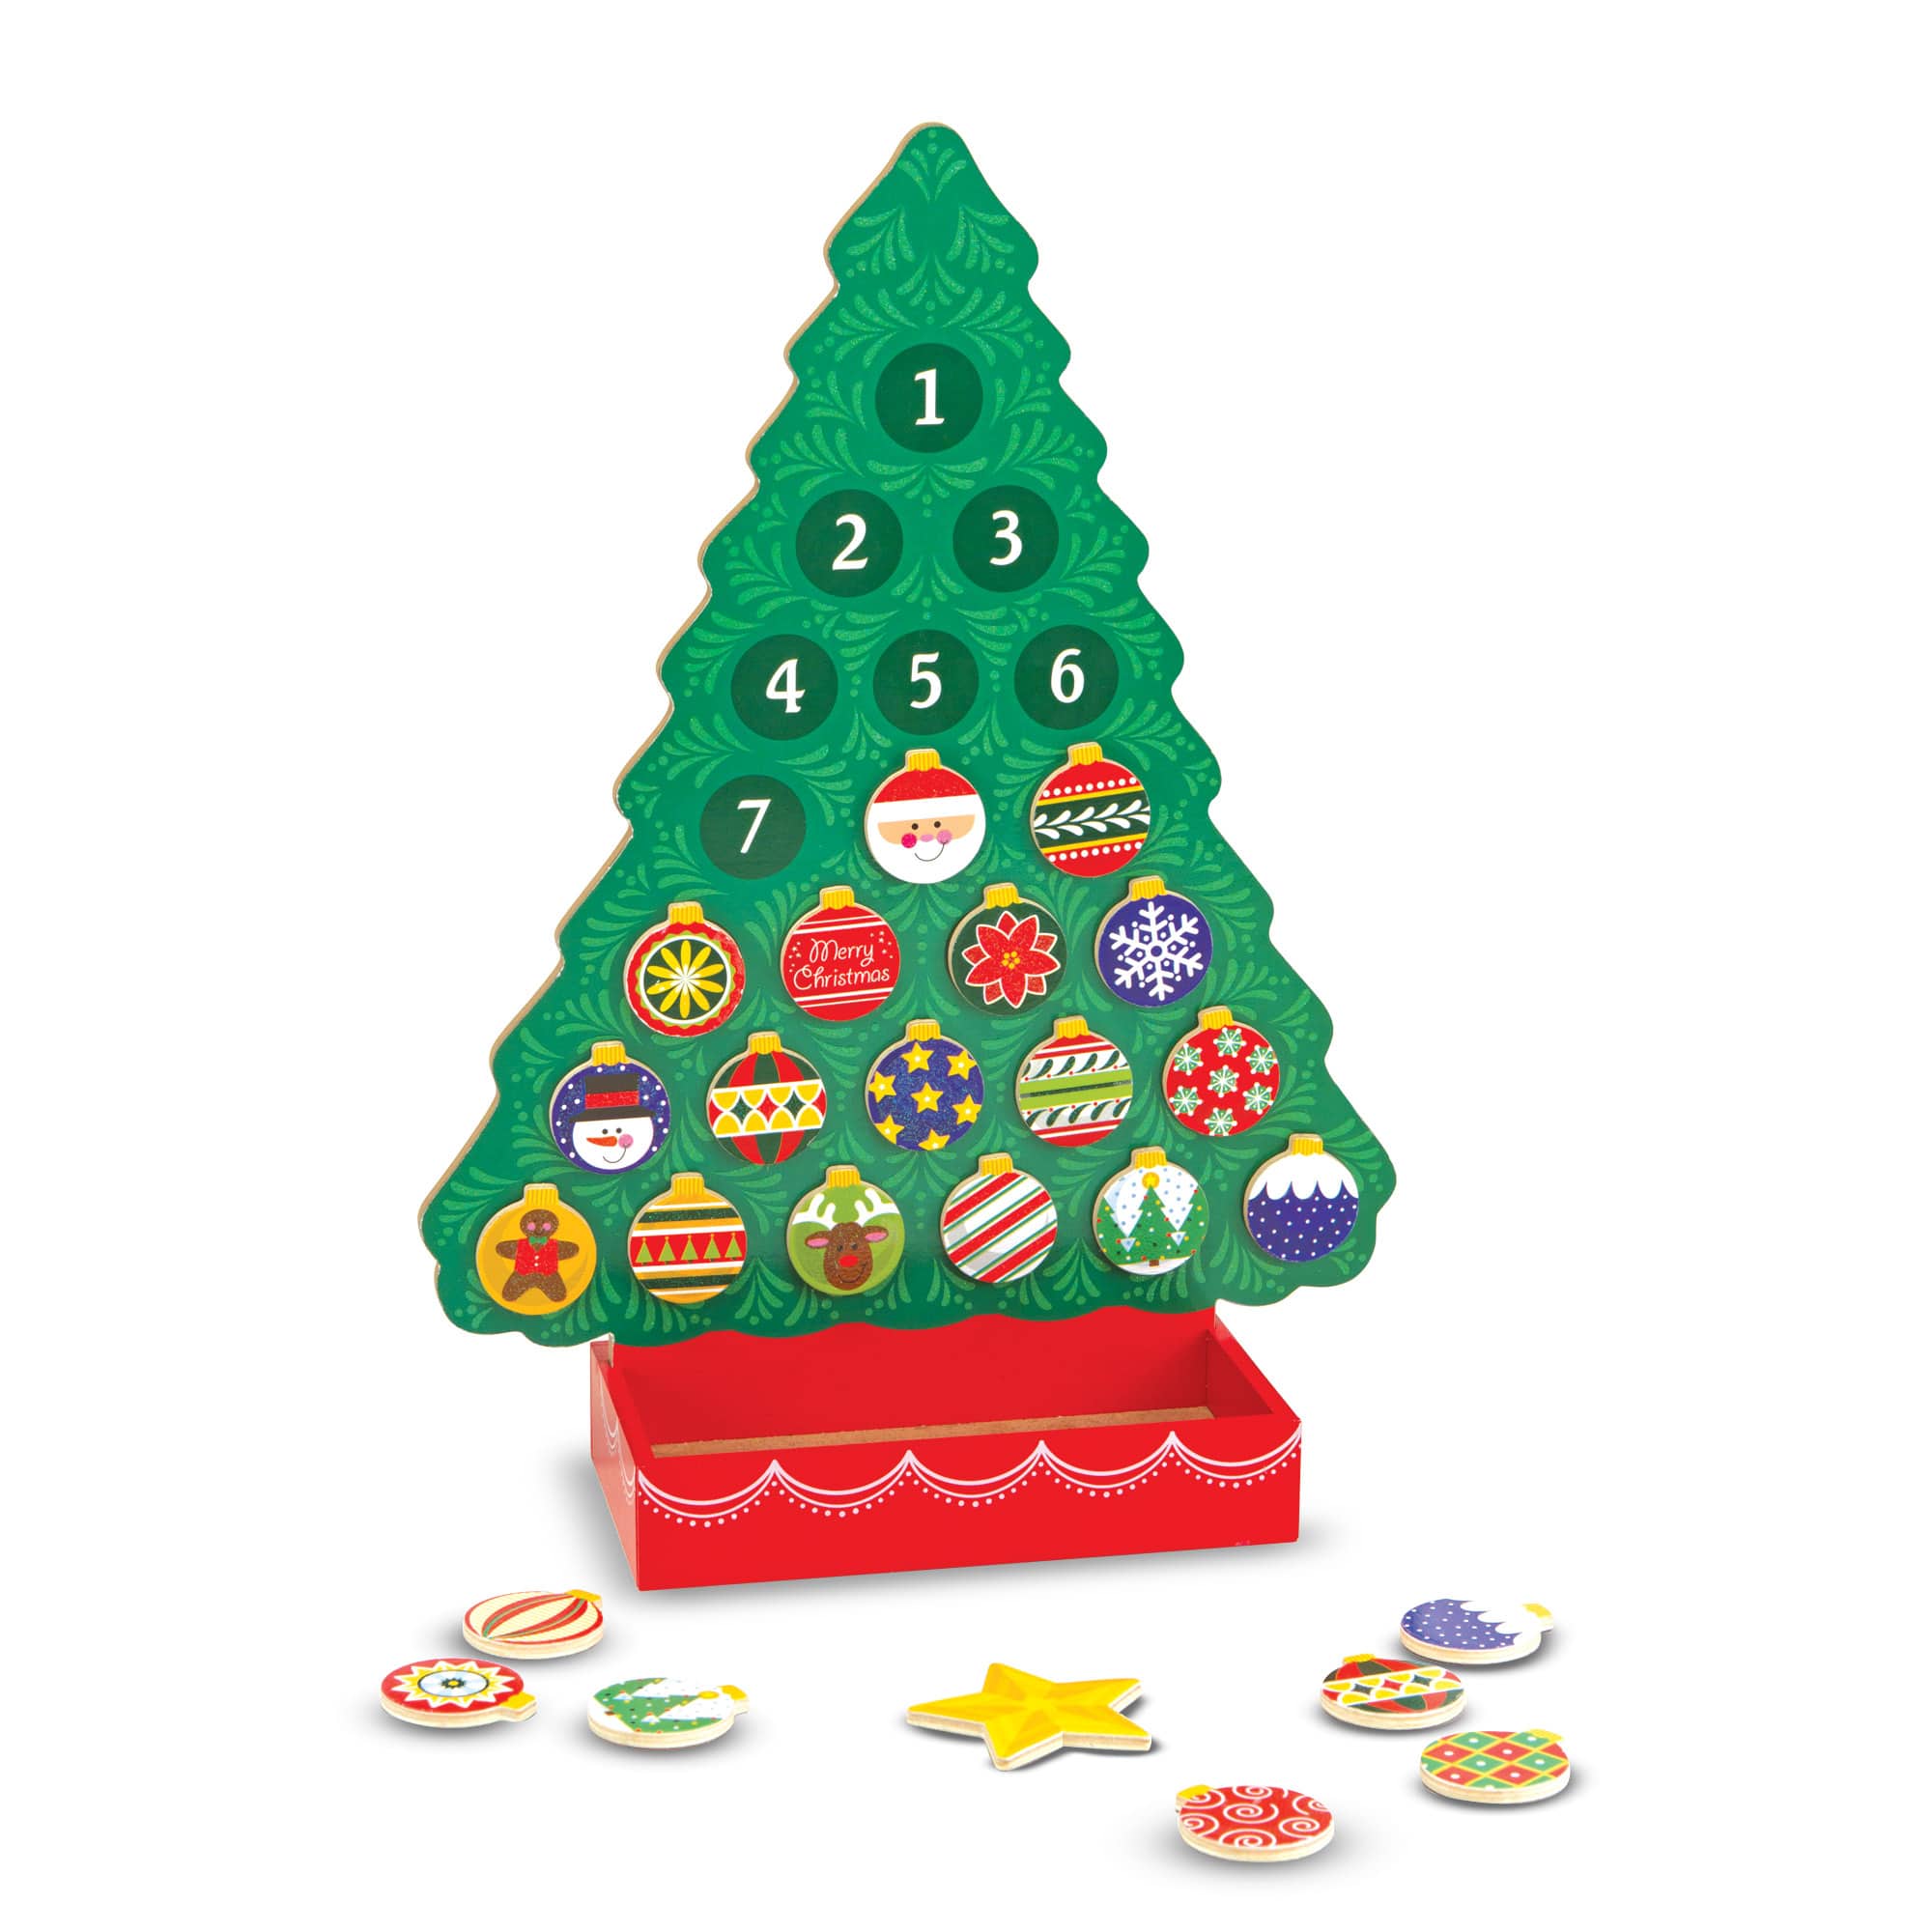 DIY Kit, Yuletide Christmas Tree Ornament Kit, Painting Craft Kit